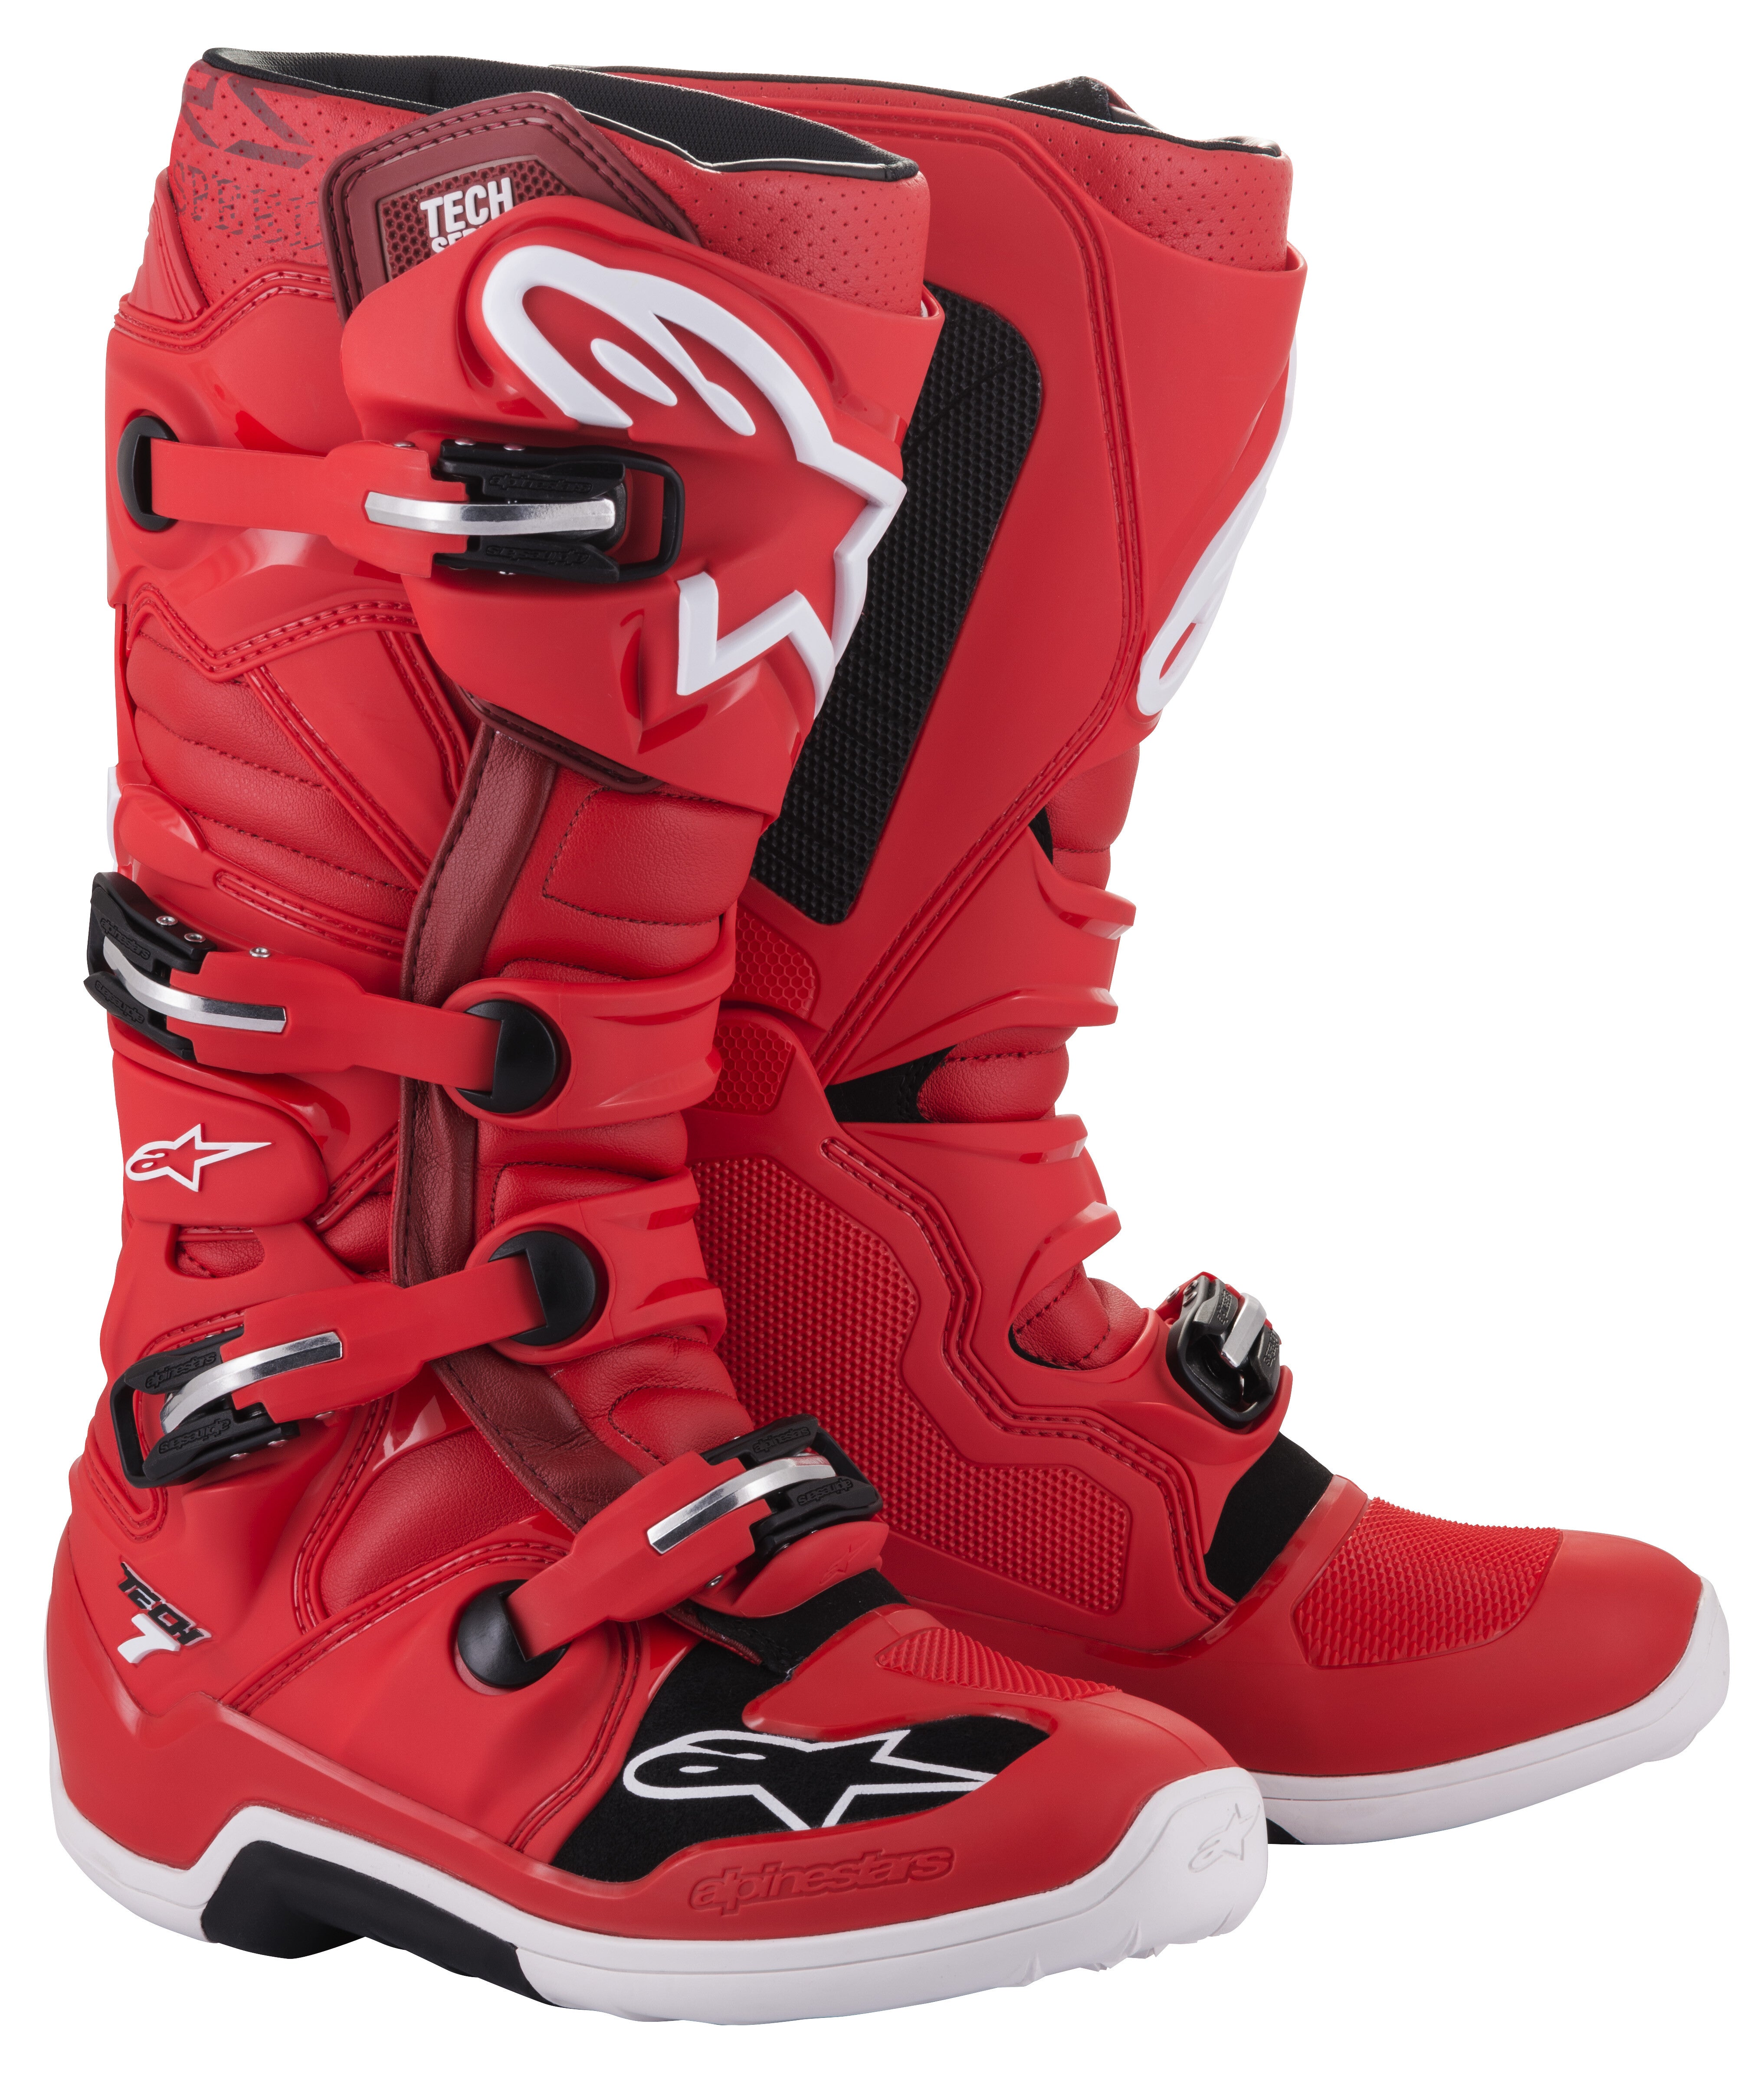 Alpinestars Tech 7 Mx Boots Red Us 16 2012014-30-16